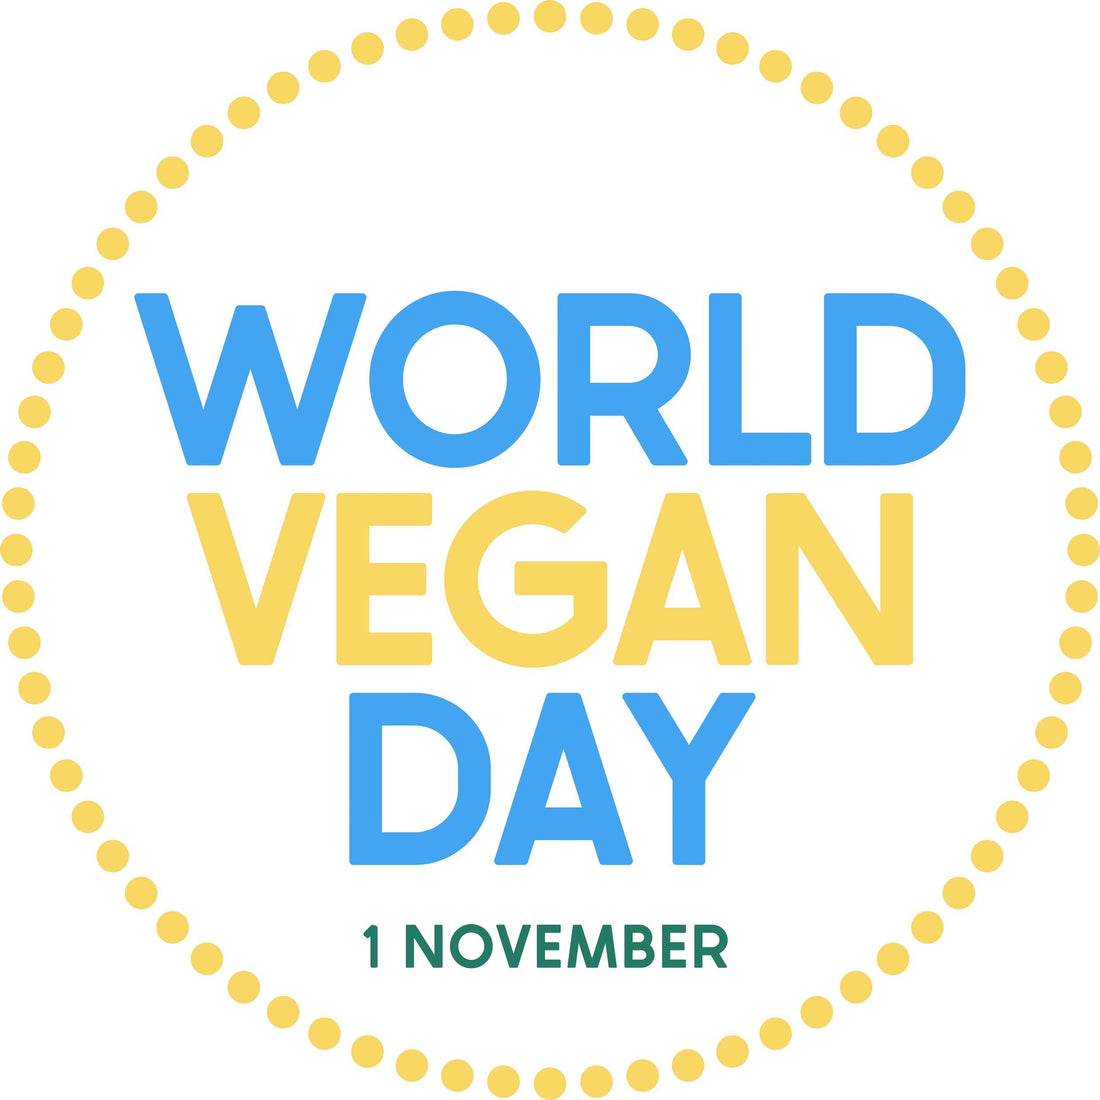 World Vegan Day 1 November